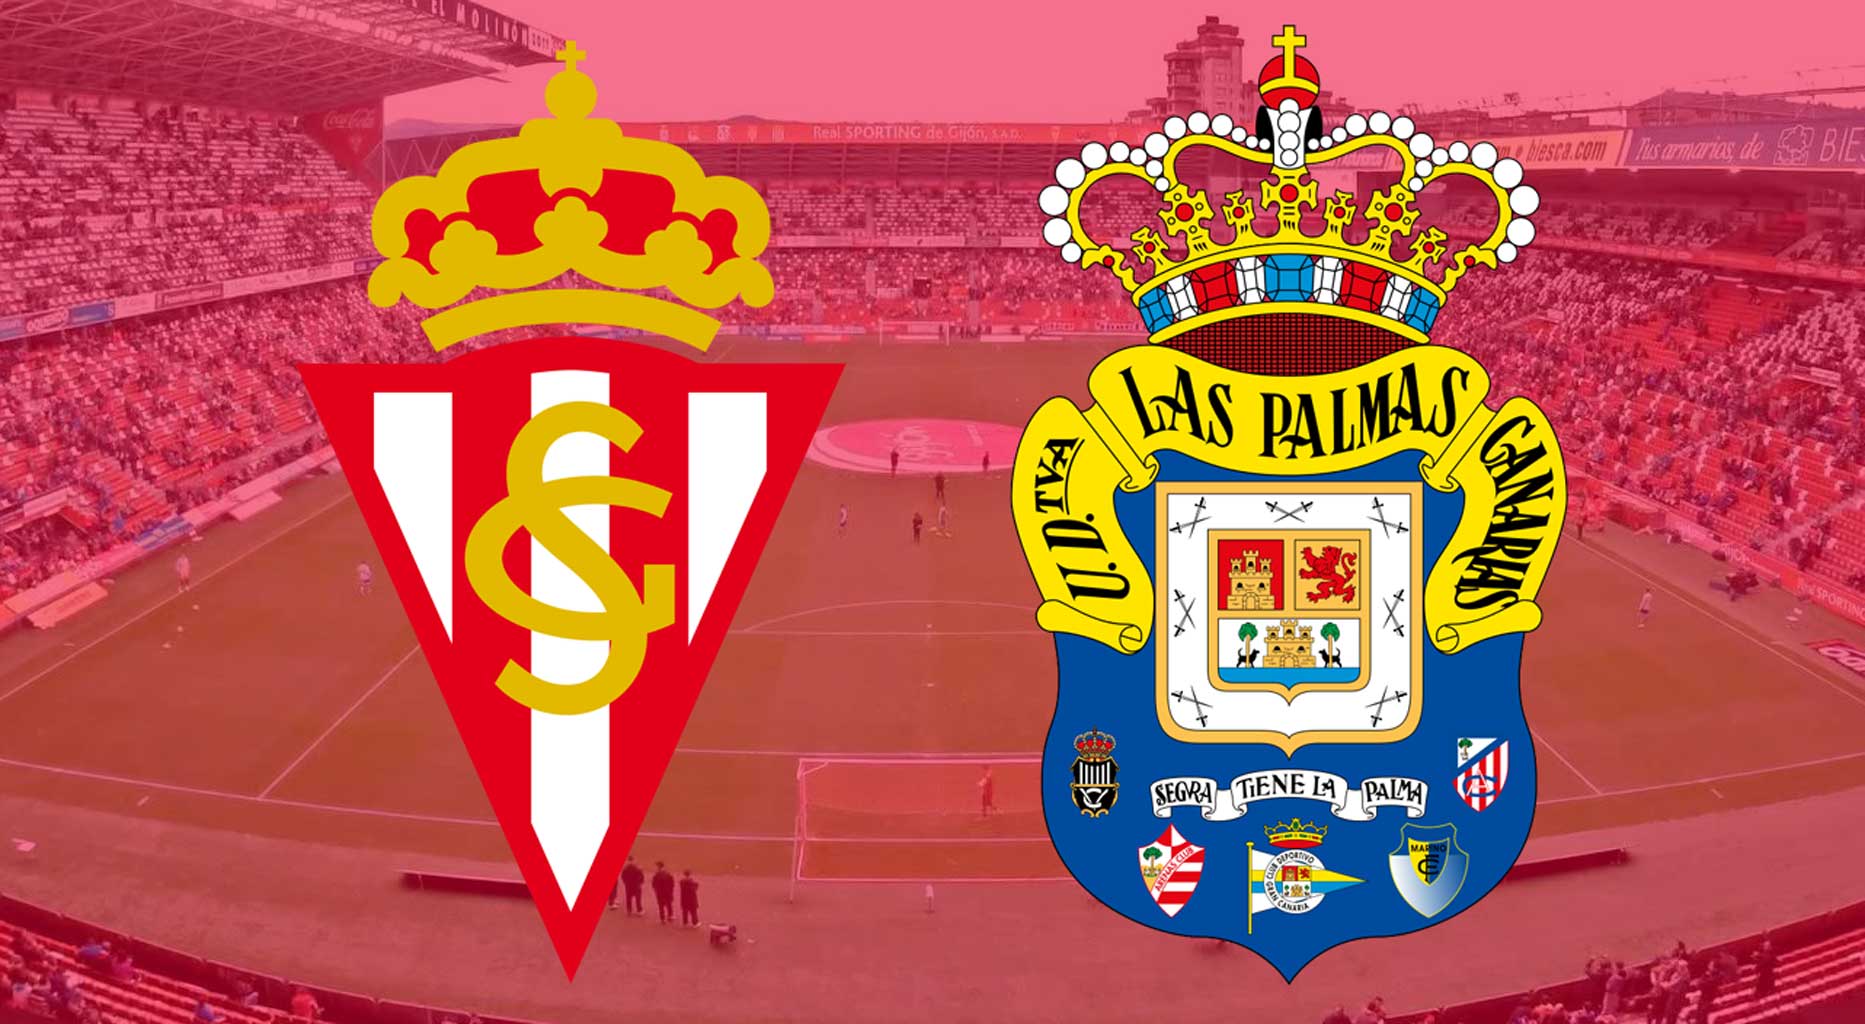 ⏱️ Minuto a minuto jornada 7 | Real Sporting de Gijón - UD Las Palmas Sporting1905